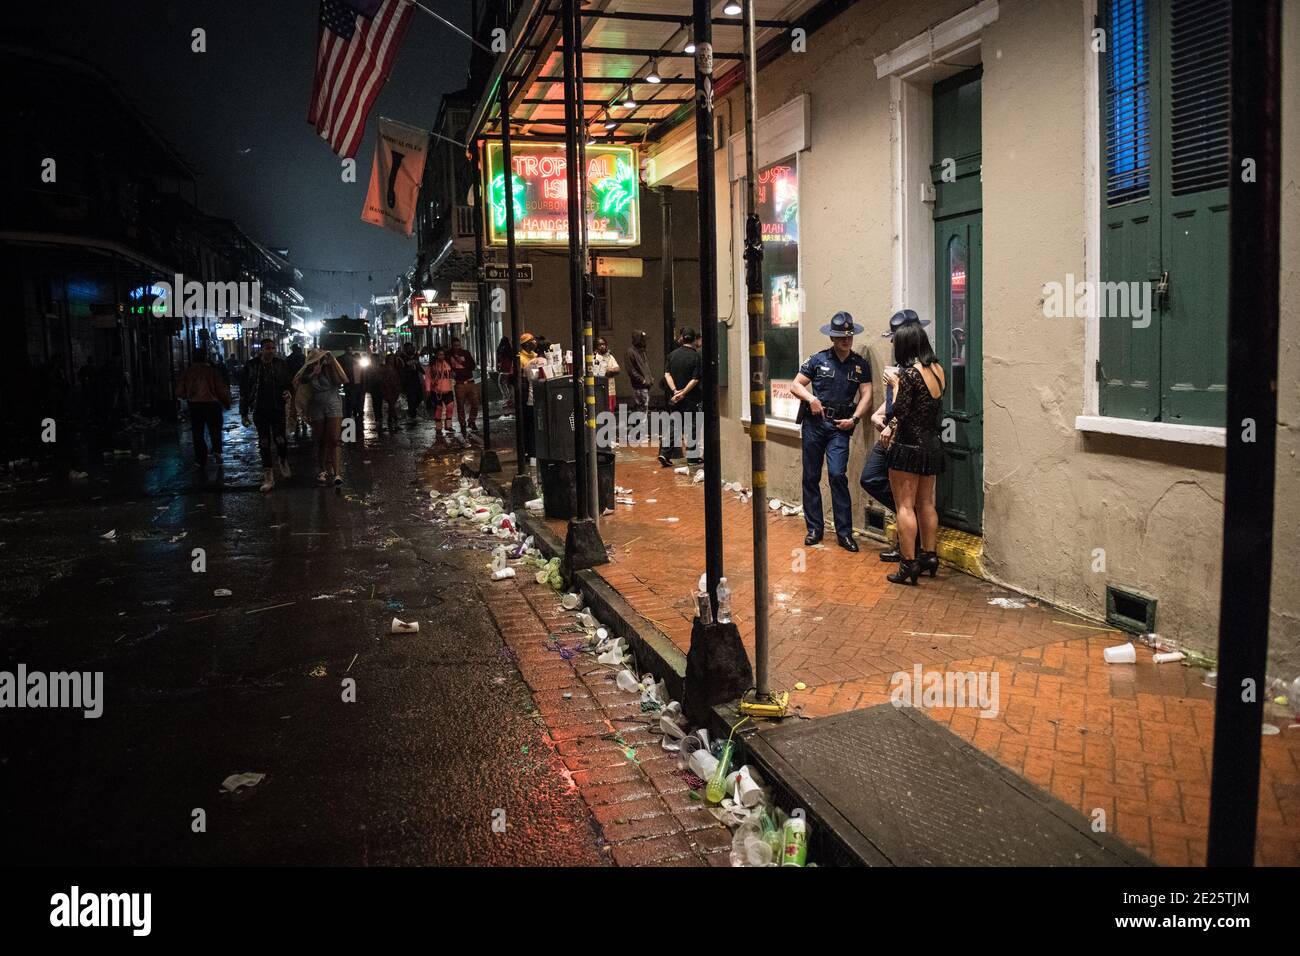 Police patrolling Bourbon Street Late Night early morning Mardi Gras, New Orleans, Louisiana, USA. Stock Photo